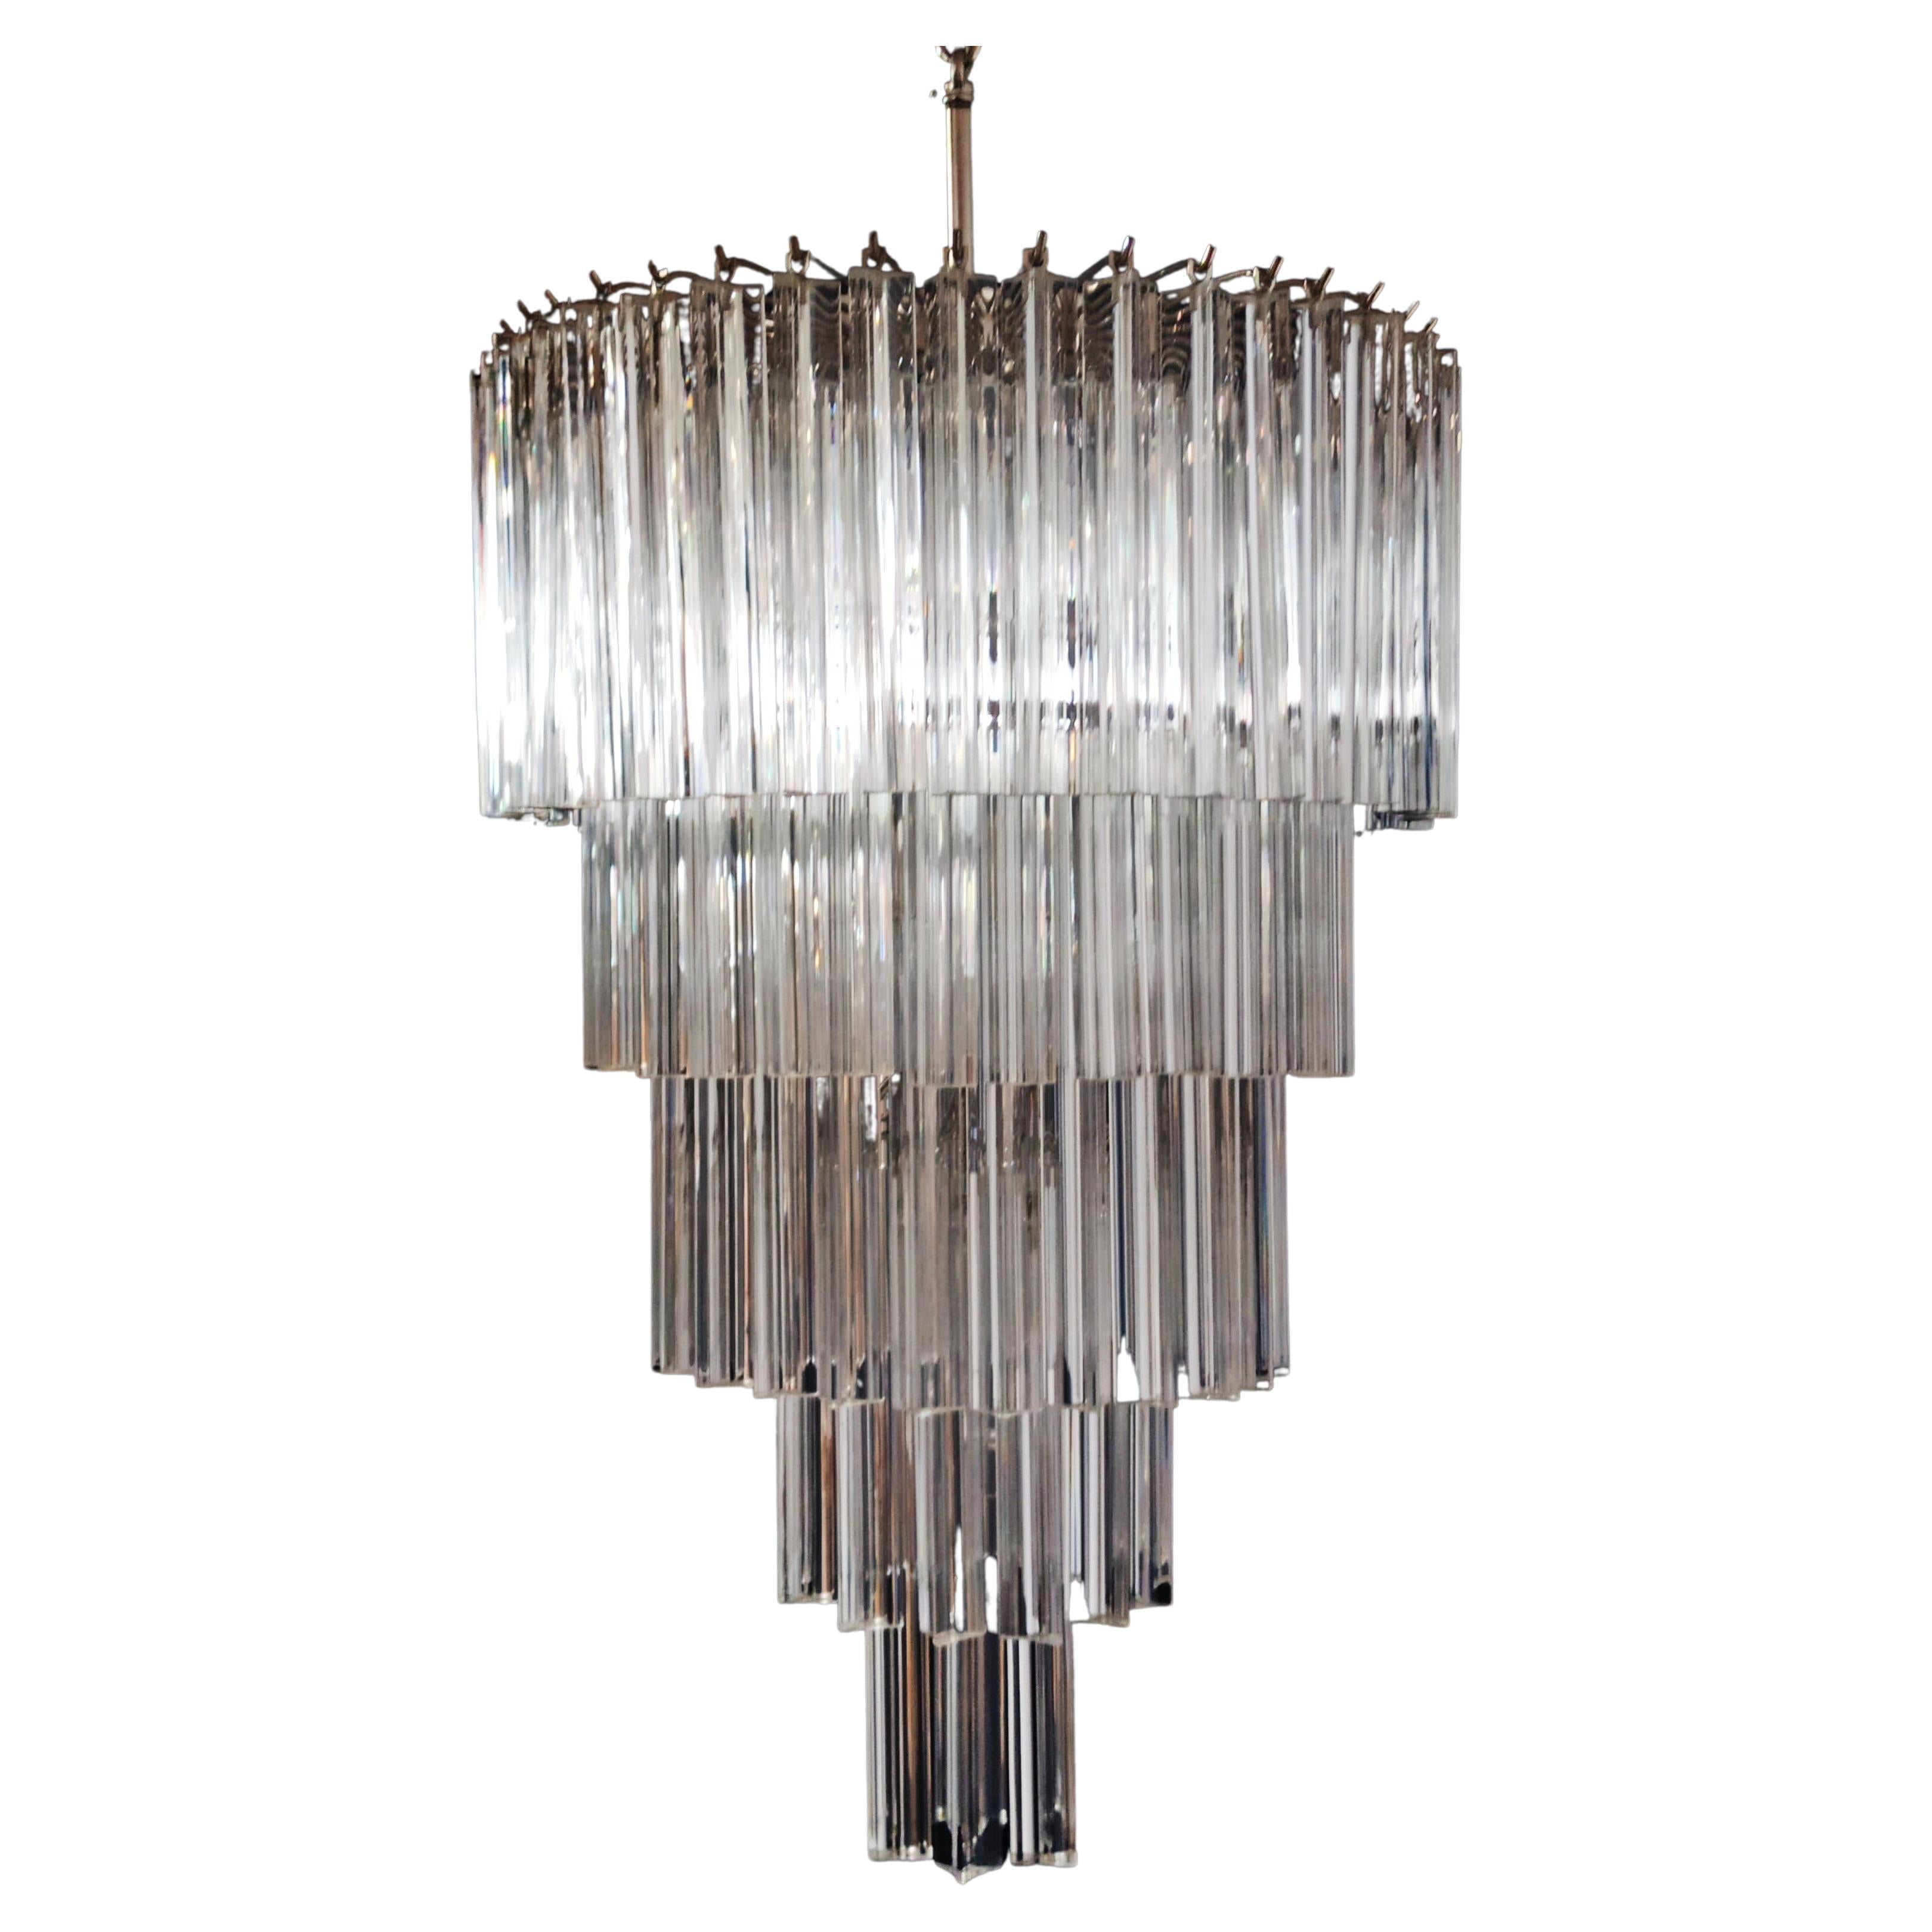 Beautiful Murano glass chandelier - 111 transparent triedri